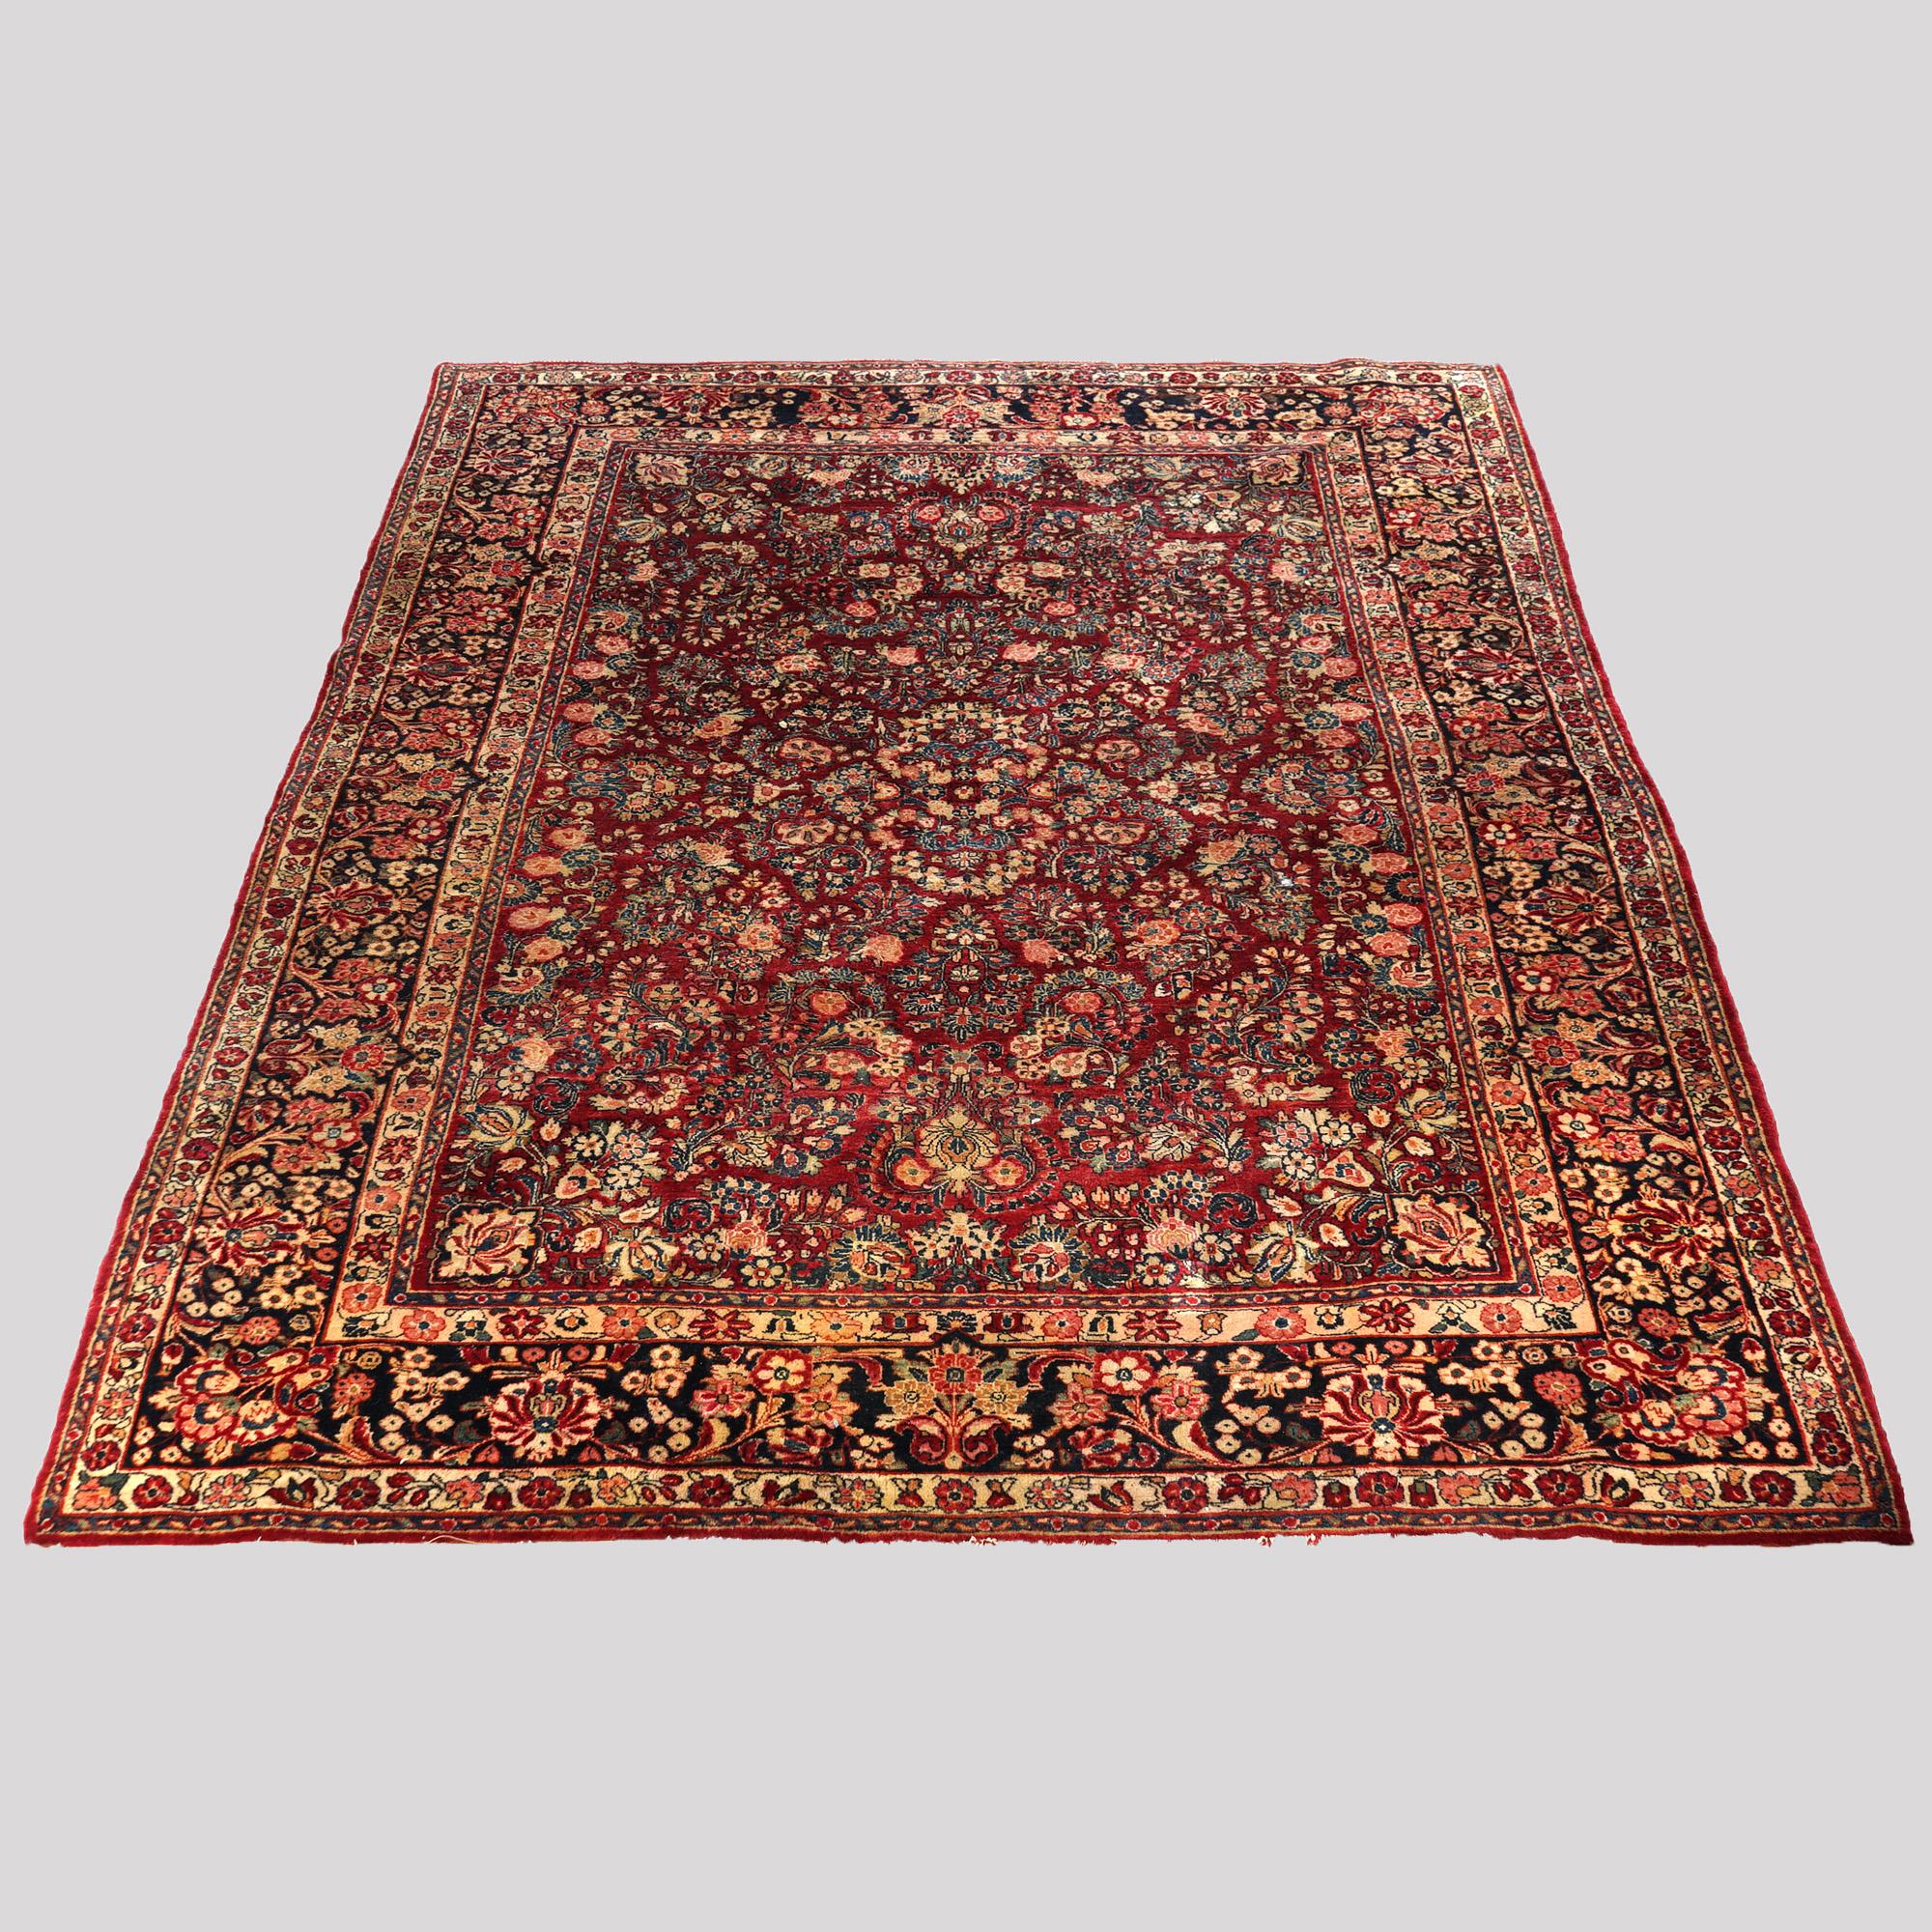 Asian Antique Sarouk Oriental Wool Carpet  9’ X 12’ C1930 For Sale